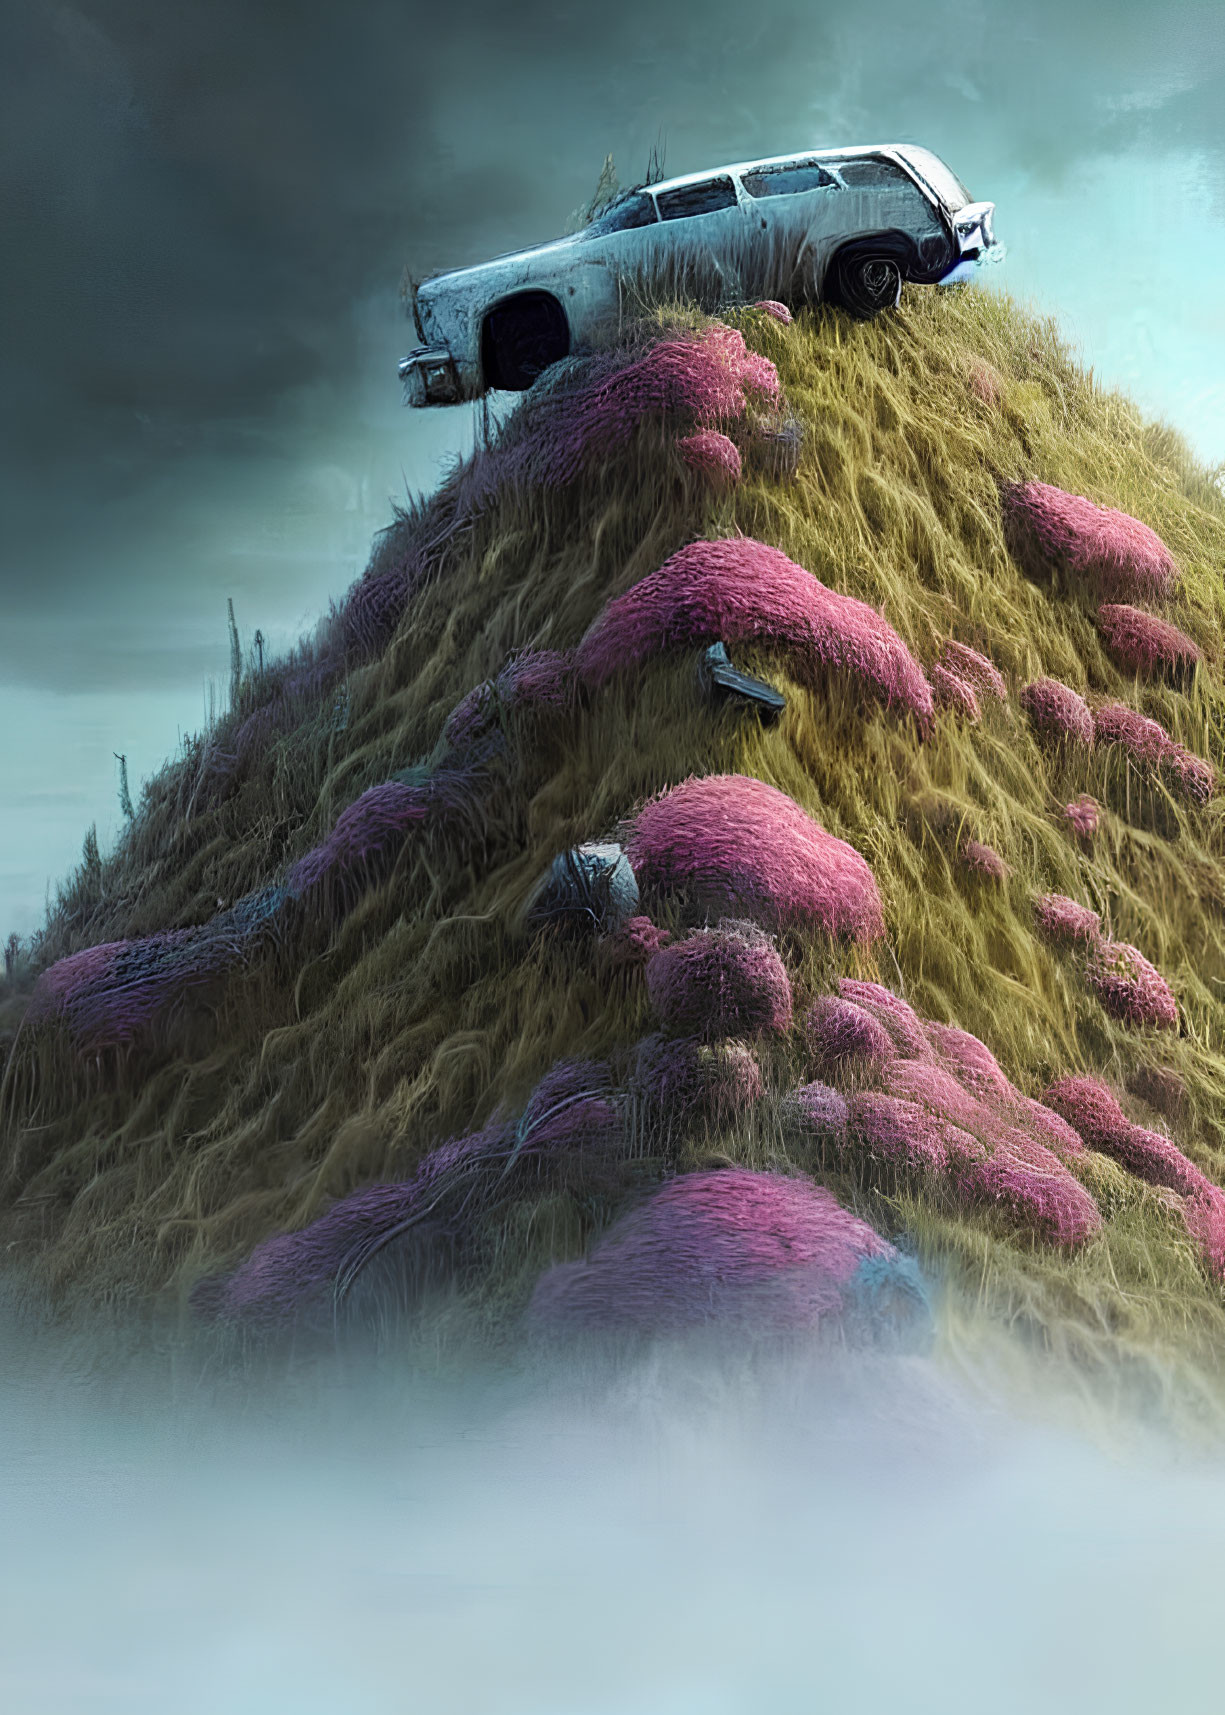 Vintage car on grassy mound in mist with pink shrubs